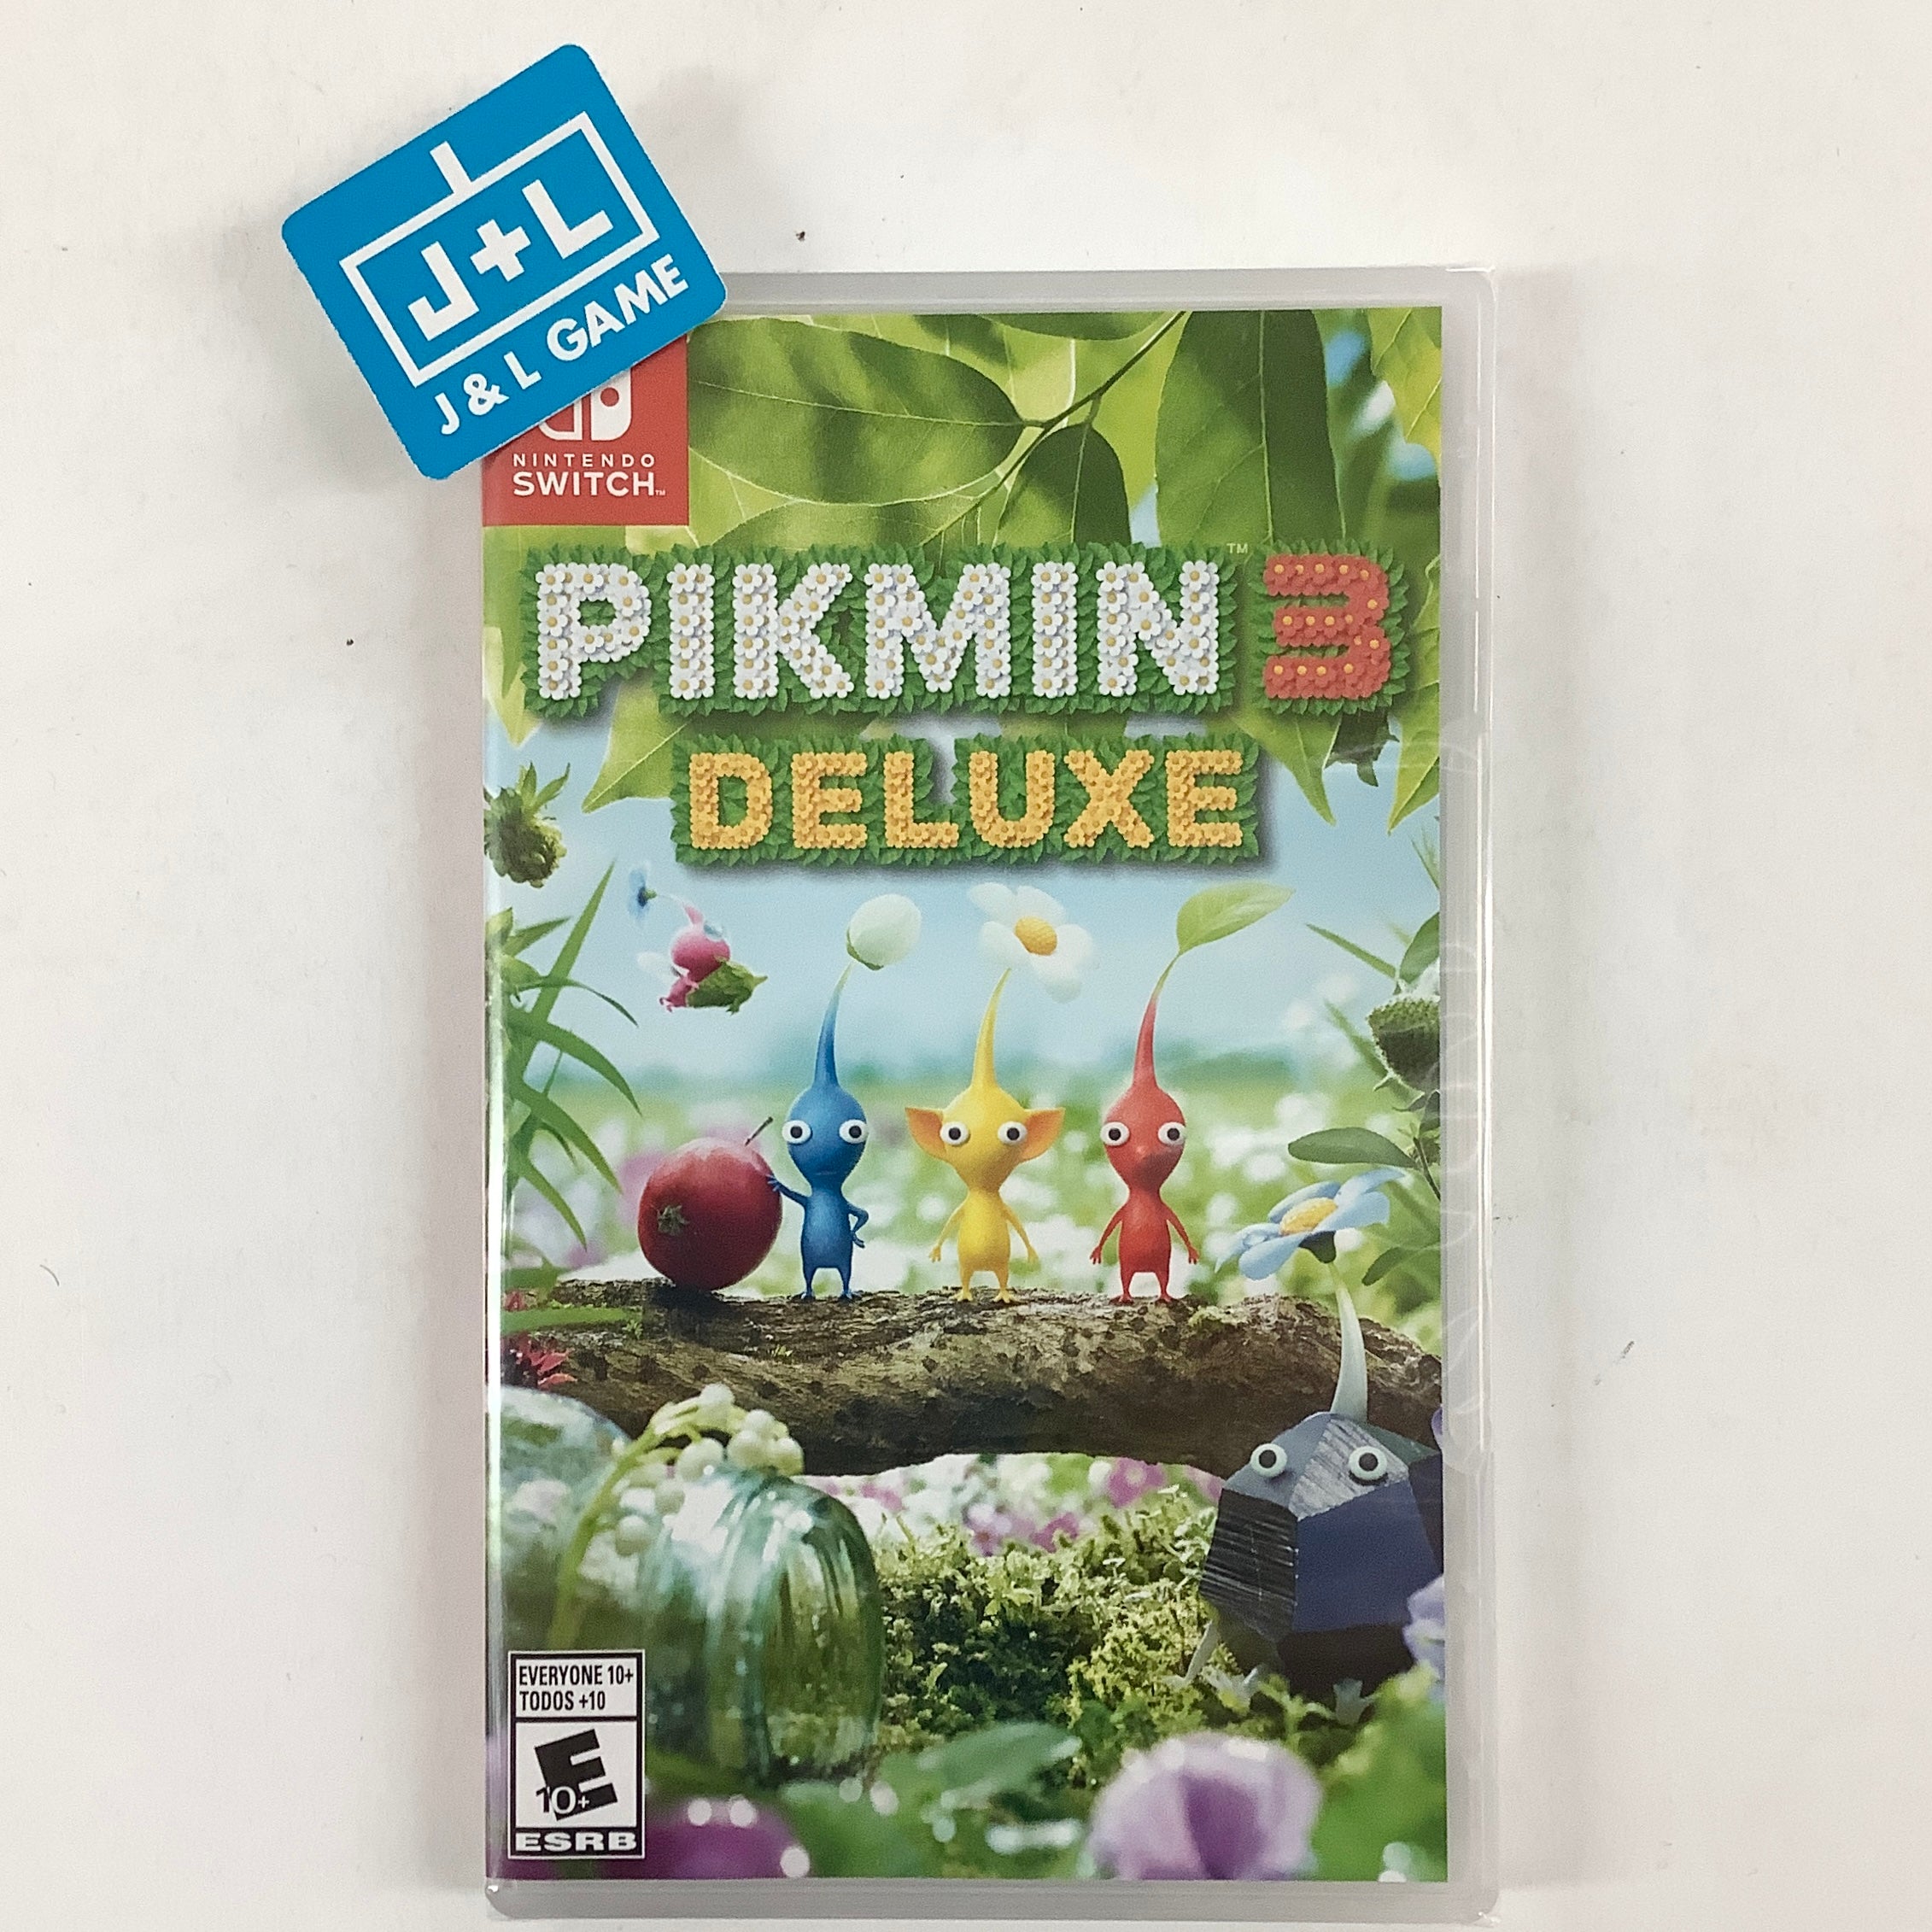 Pikmin 3 Deluxe - (NSW) Nintendo Switch Video Games Nintendo   